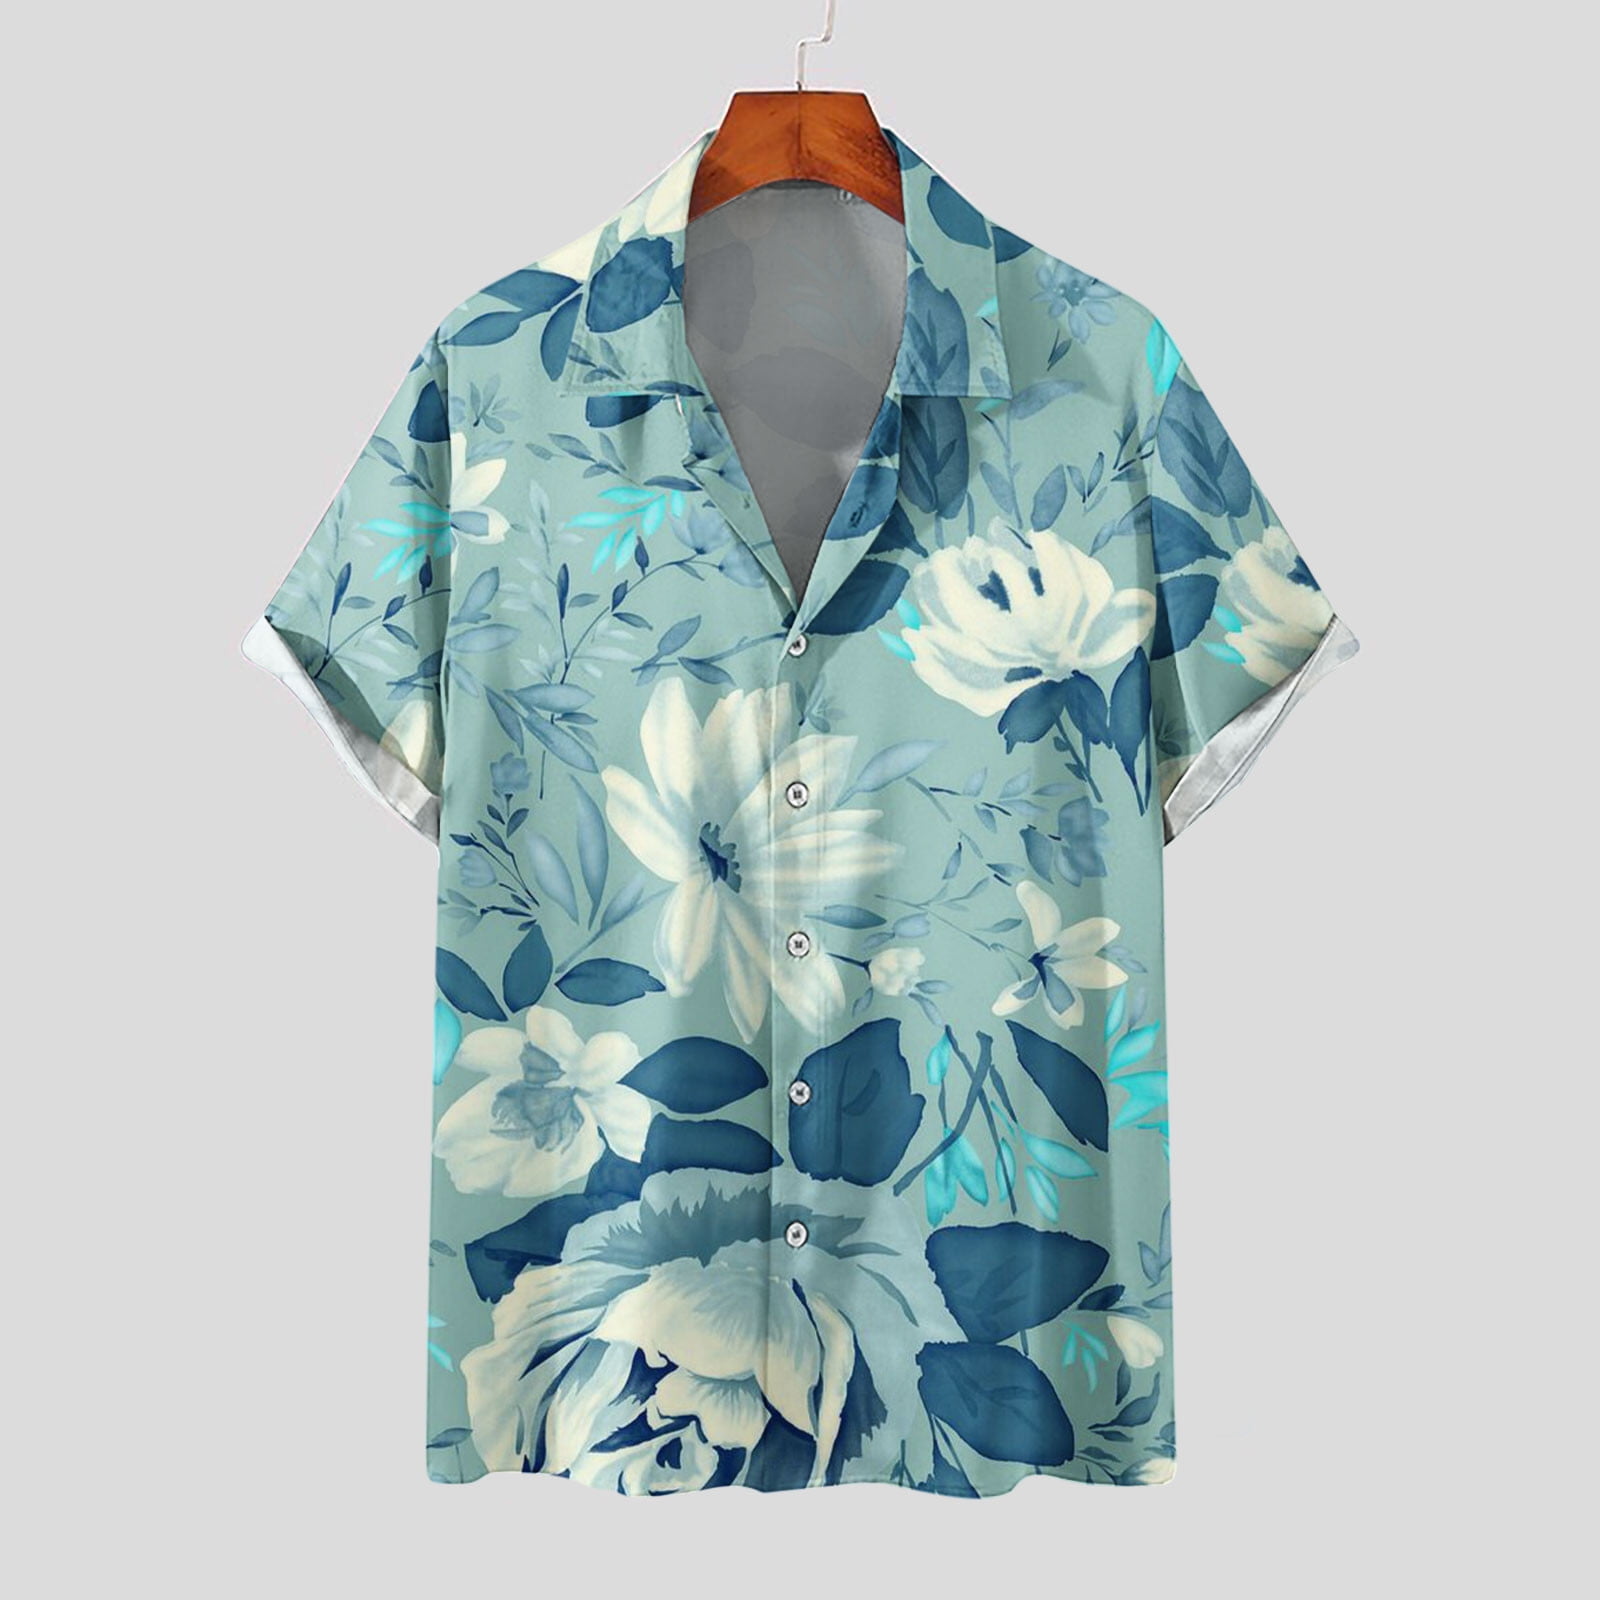 amidoa Men Fashion Casual Buttons Printing Turndown Short Sleeve Shirt  Blouse Untuckit Shirts for Men 